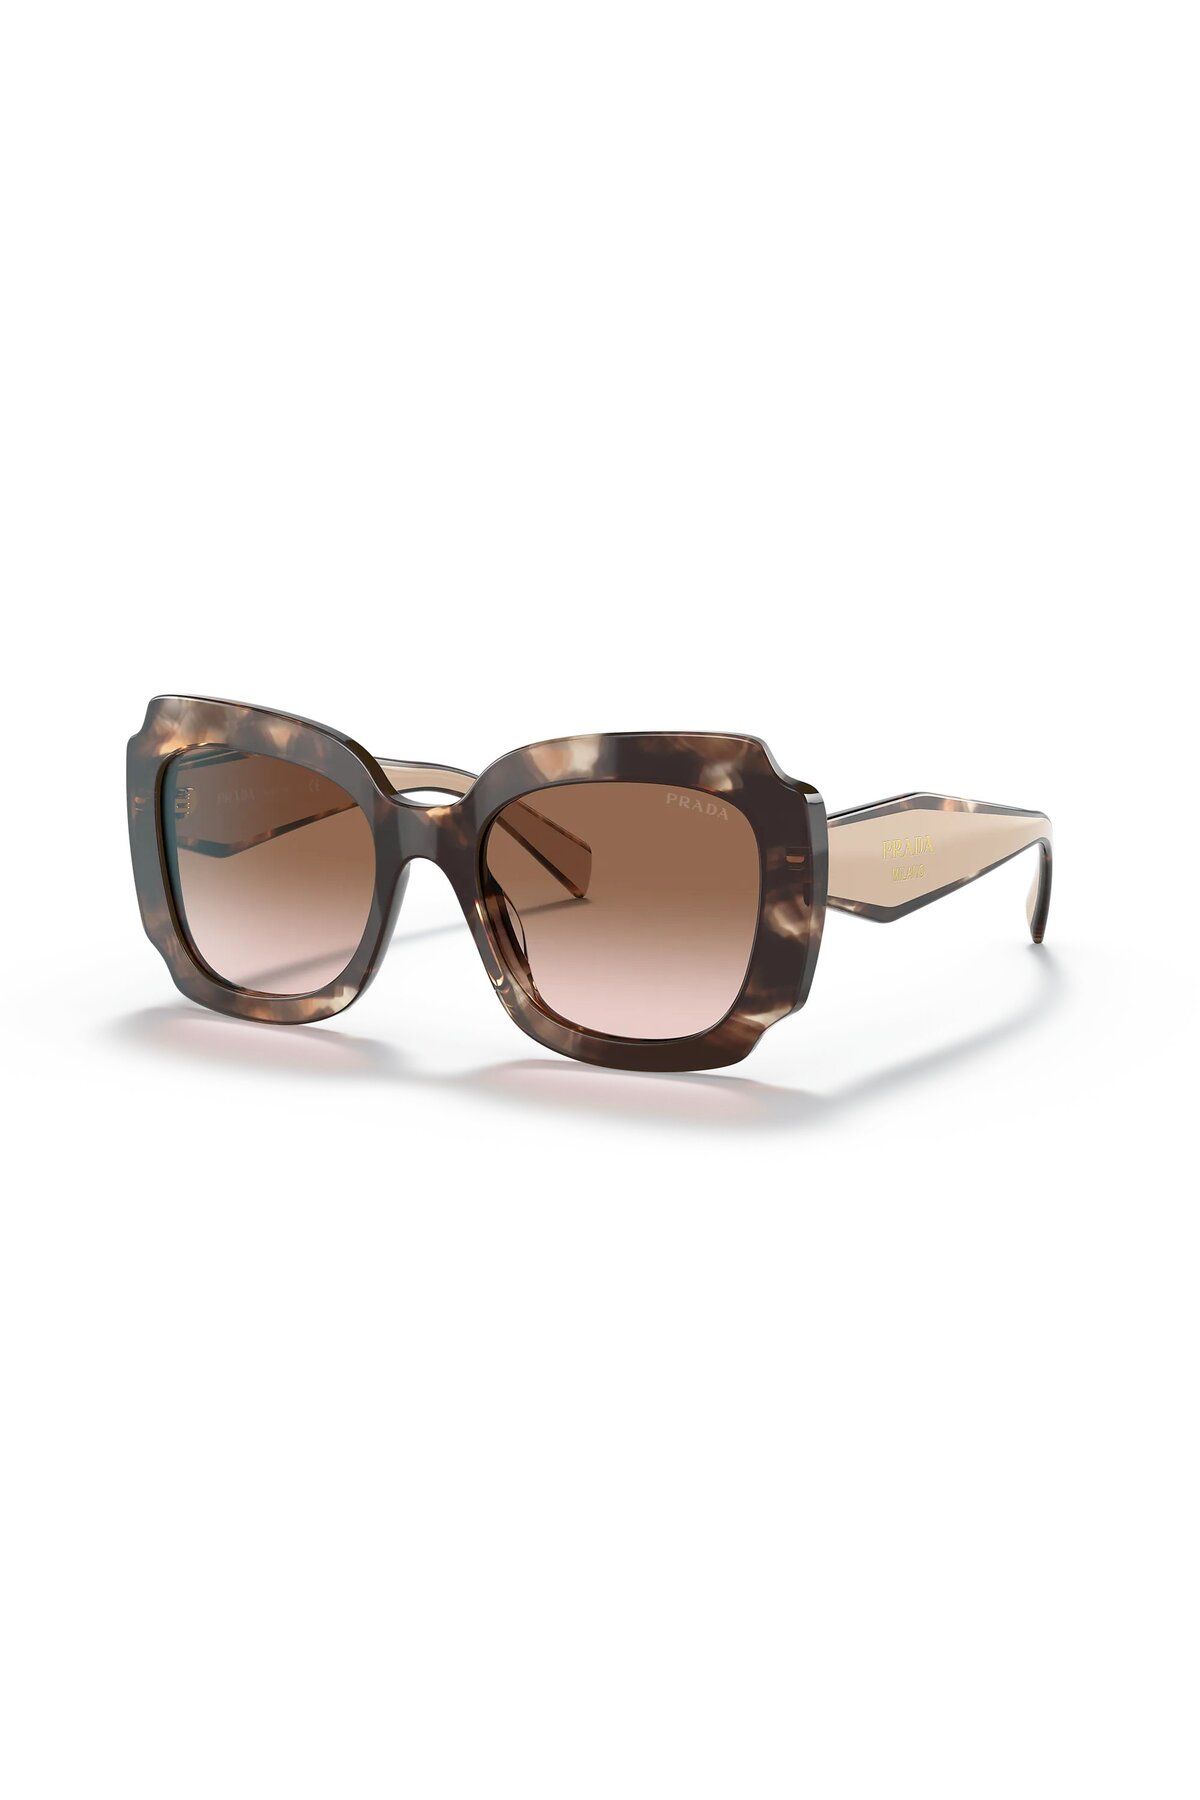 PRADA - PR 14ZS irregular-frame tortoiseshell acetate sunglasses |  Selfridges.com